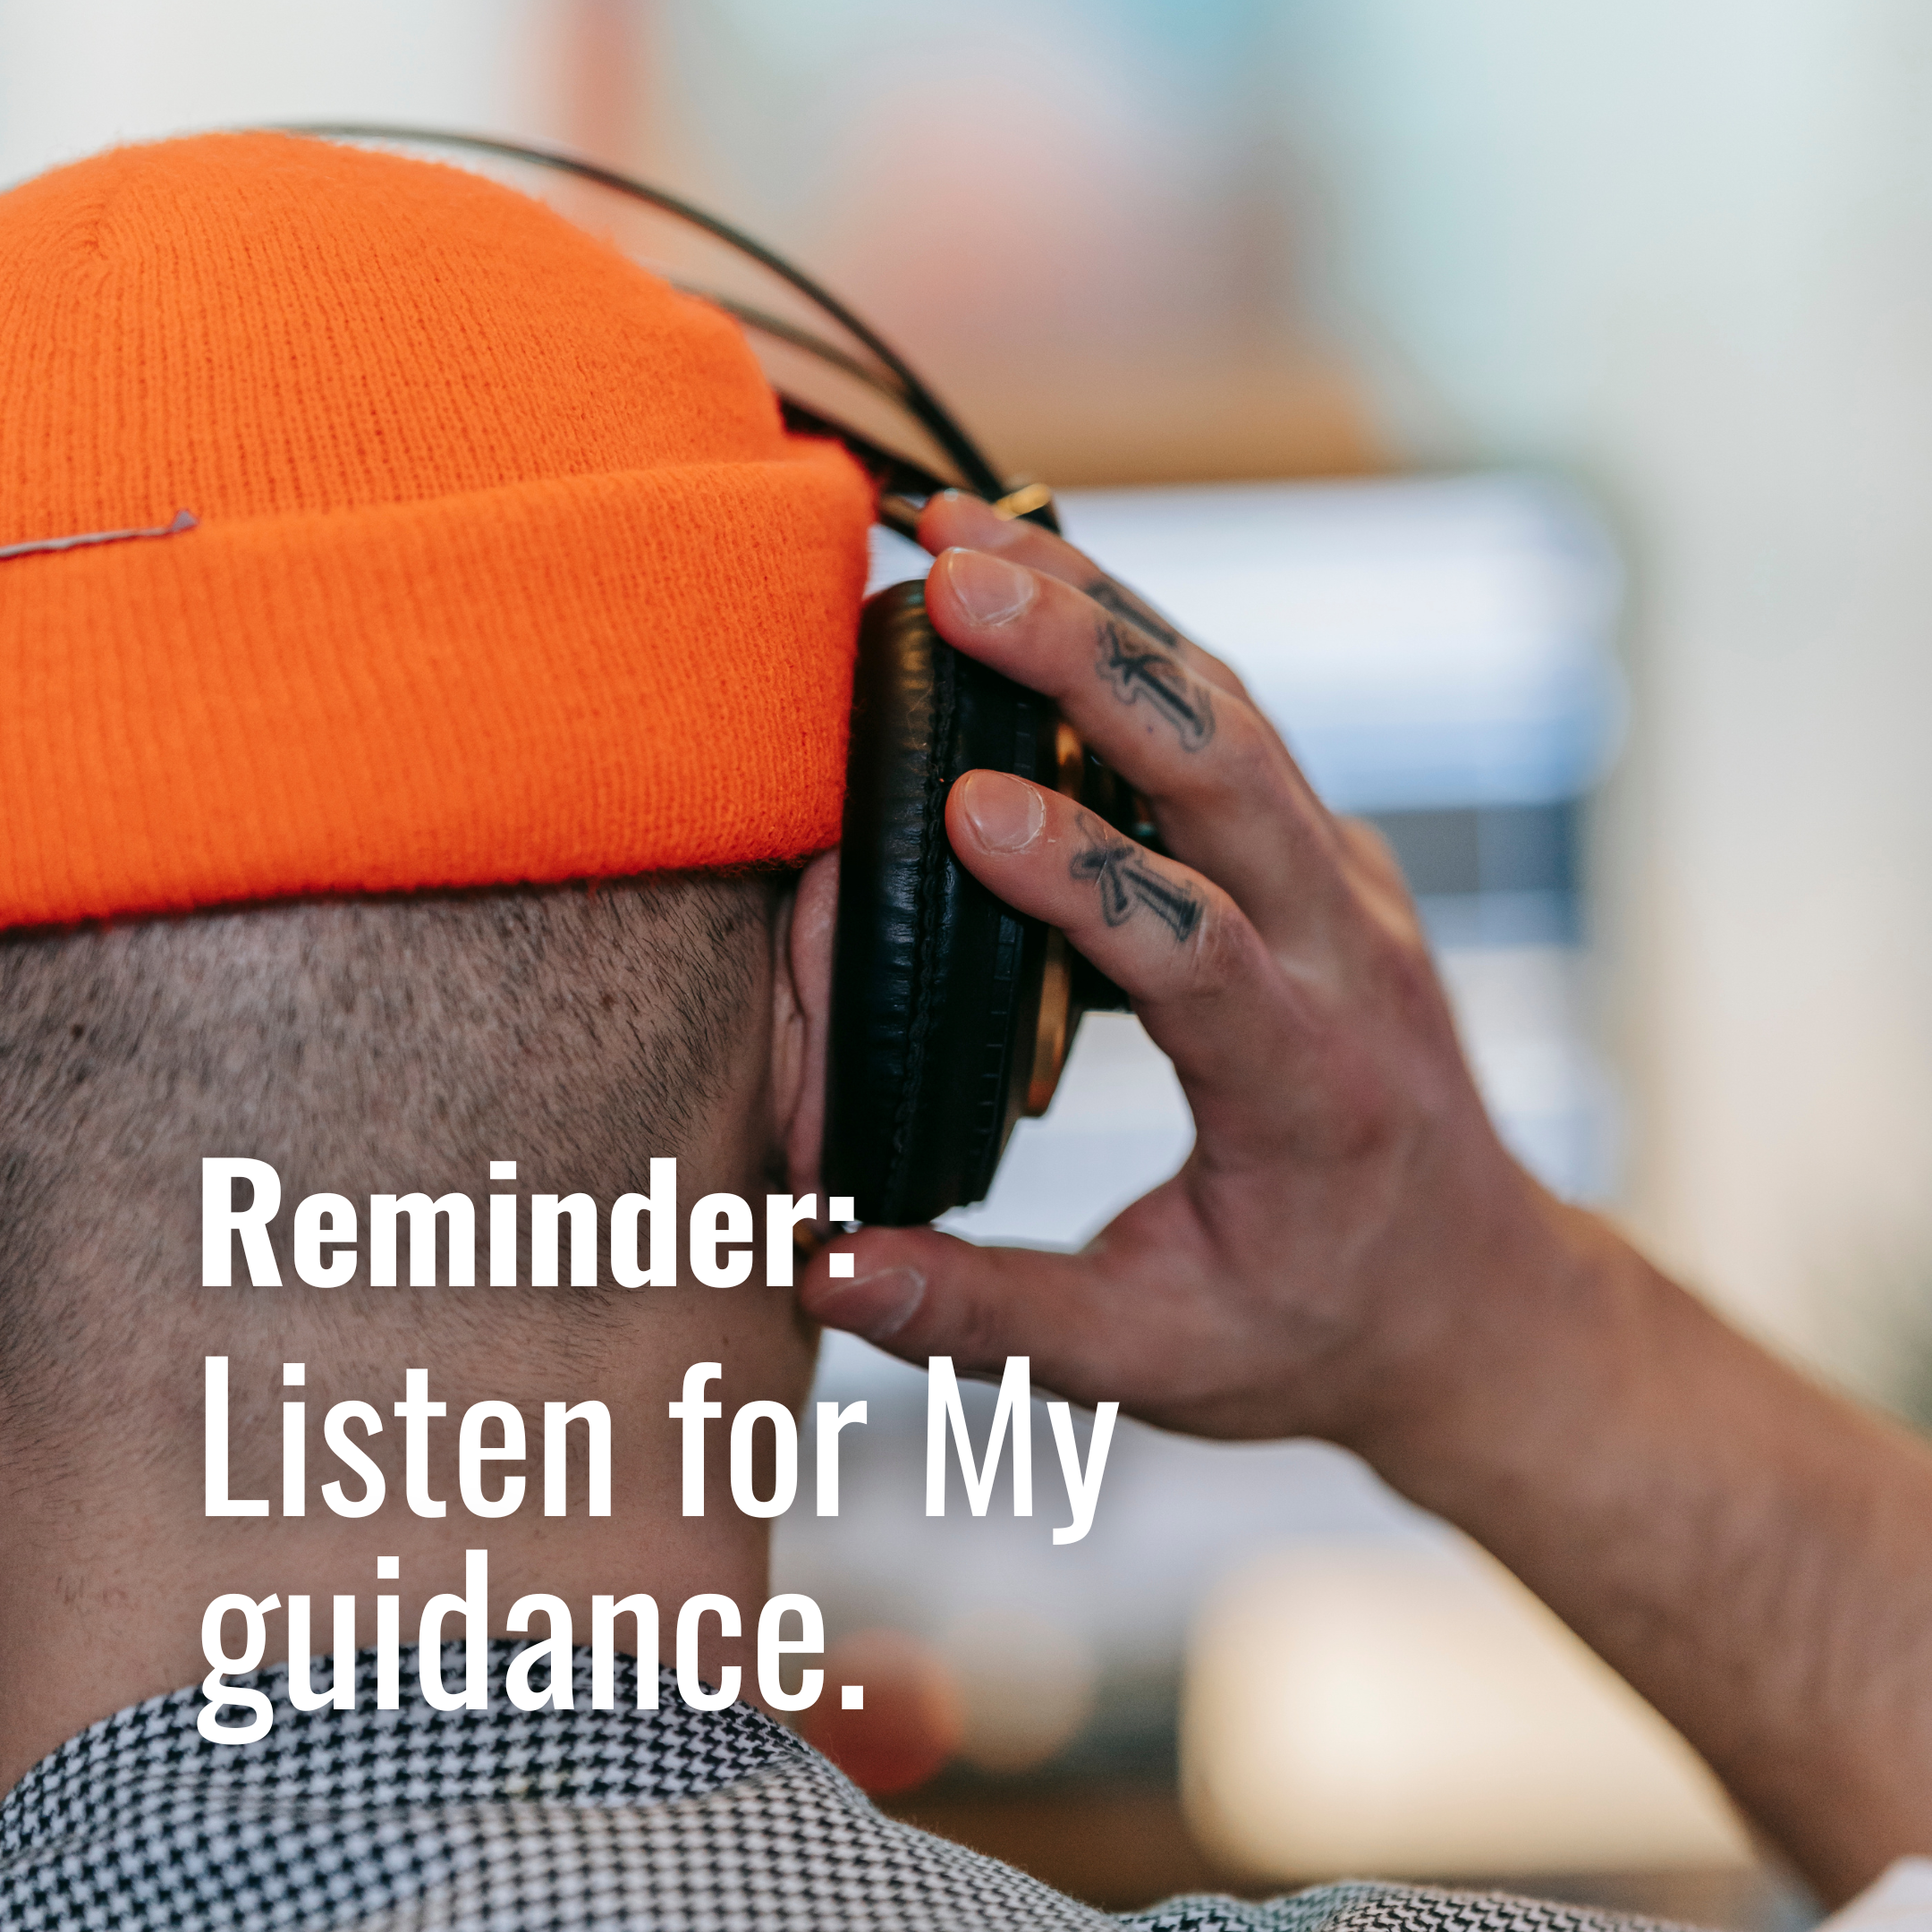 Listen for My guidance.